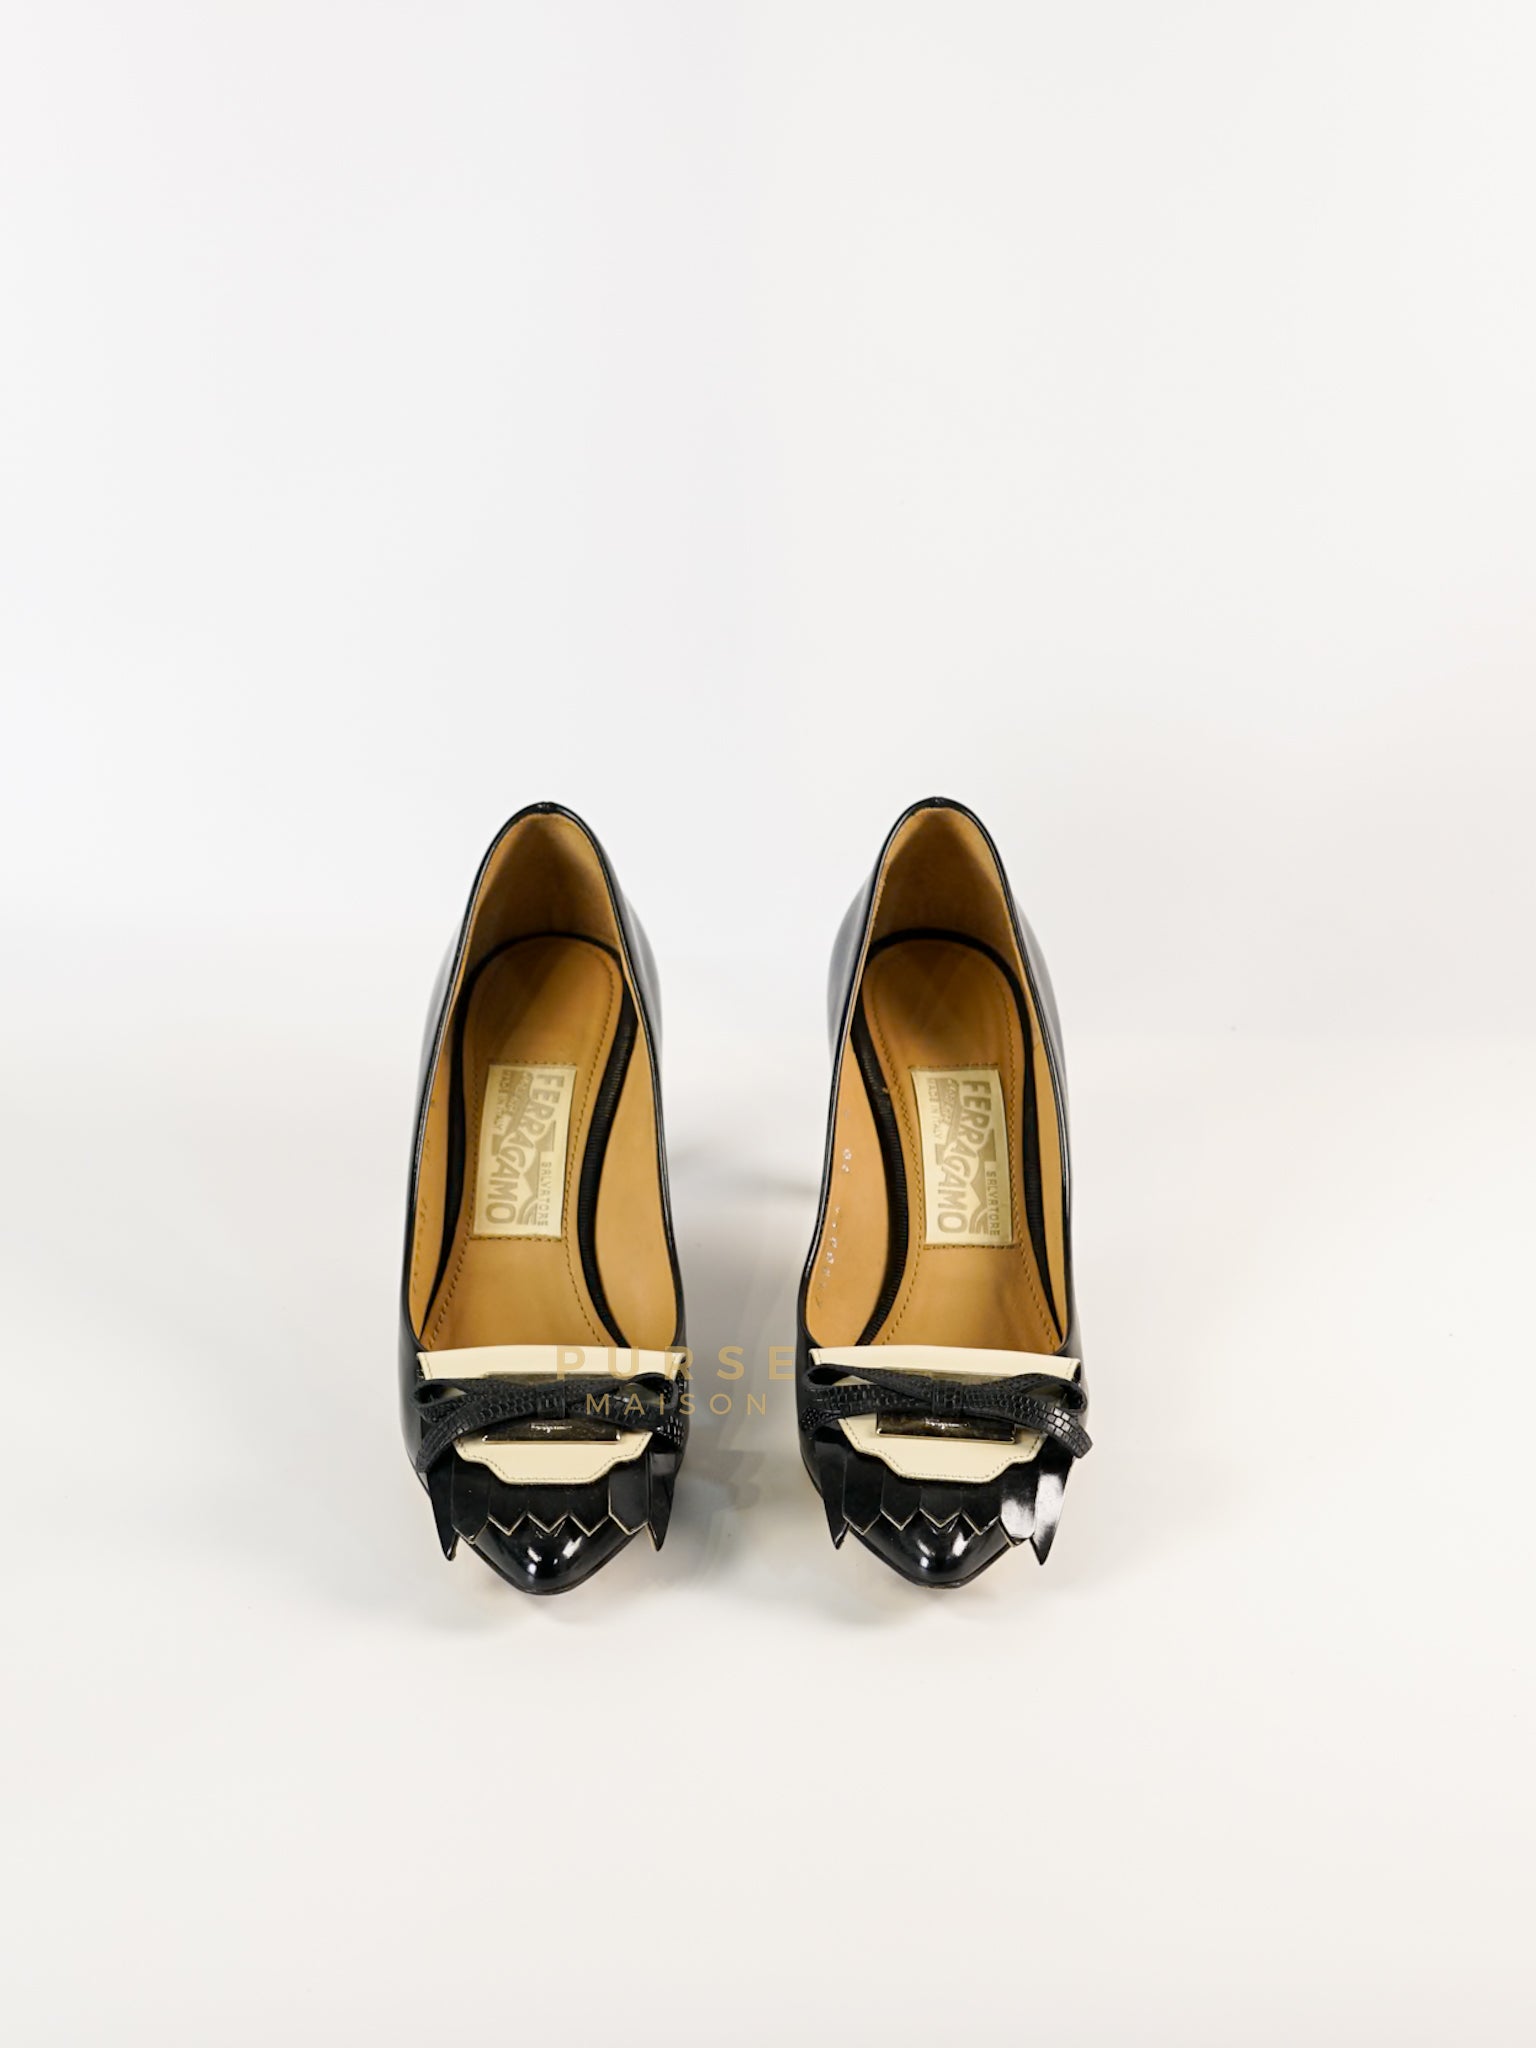 Nika 70 in Black Calf Heels Sandals Size 5 (23cm) | Purse Maison Luxury Bags Shop